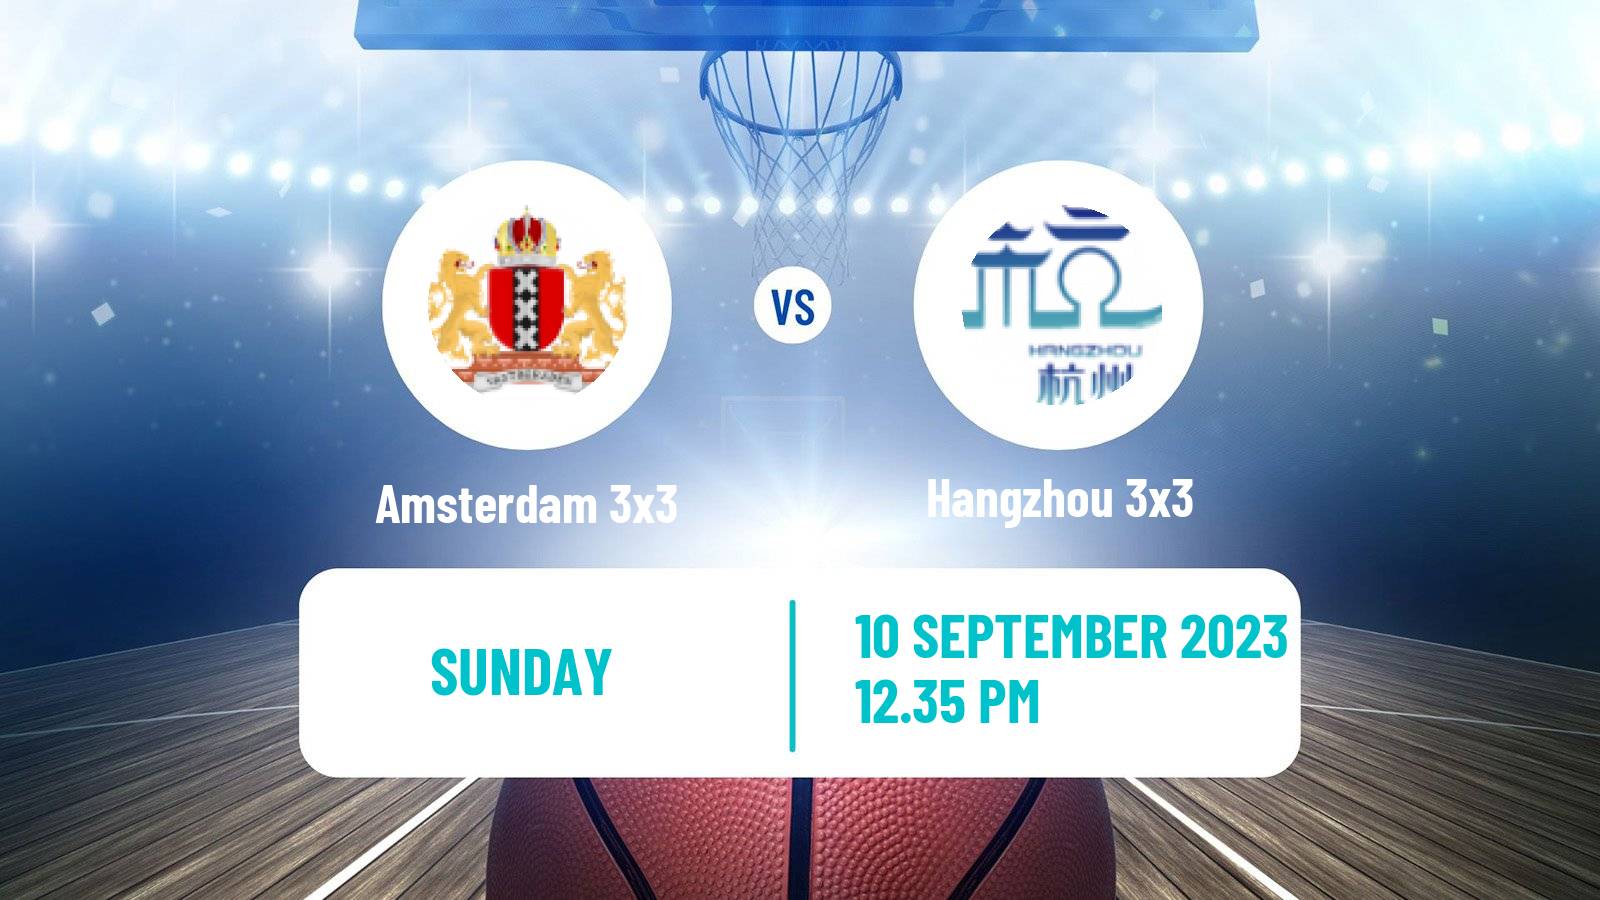 Basketball World Tour Constanta 3x3 Amsterdam 3x3 - Hangzhou 3x3